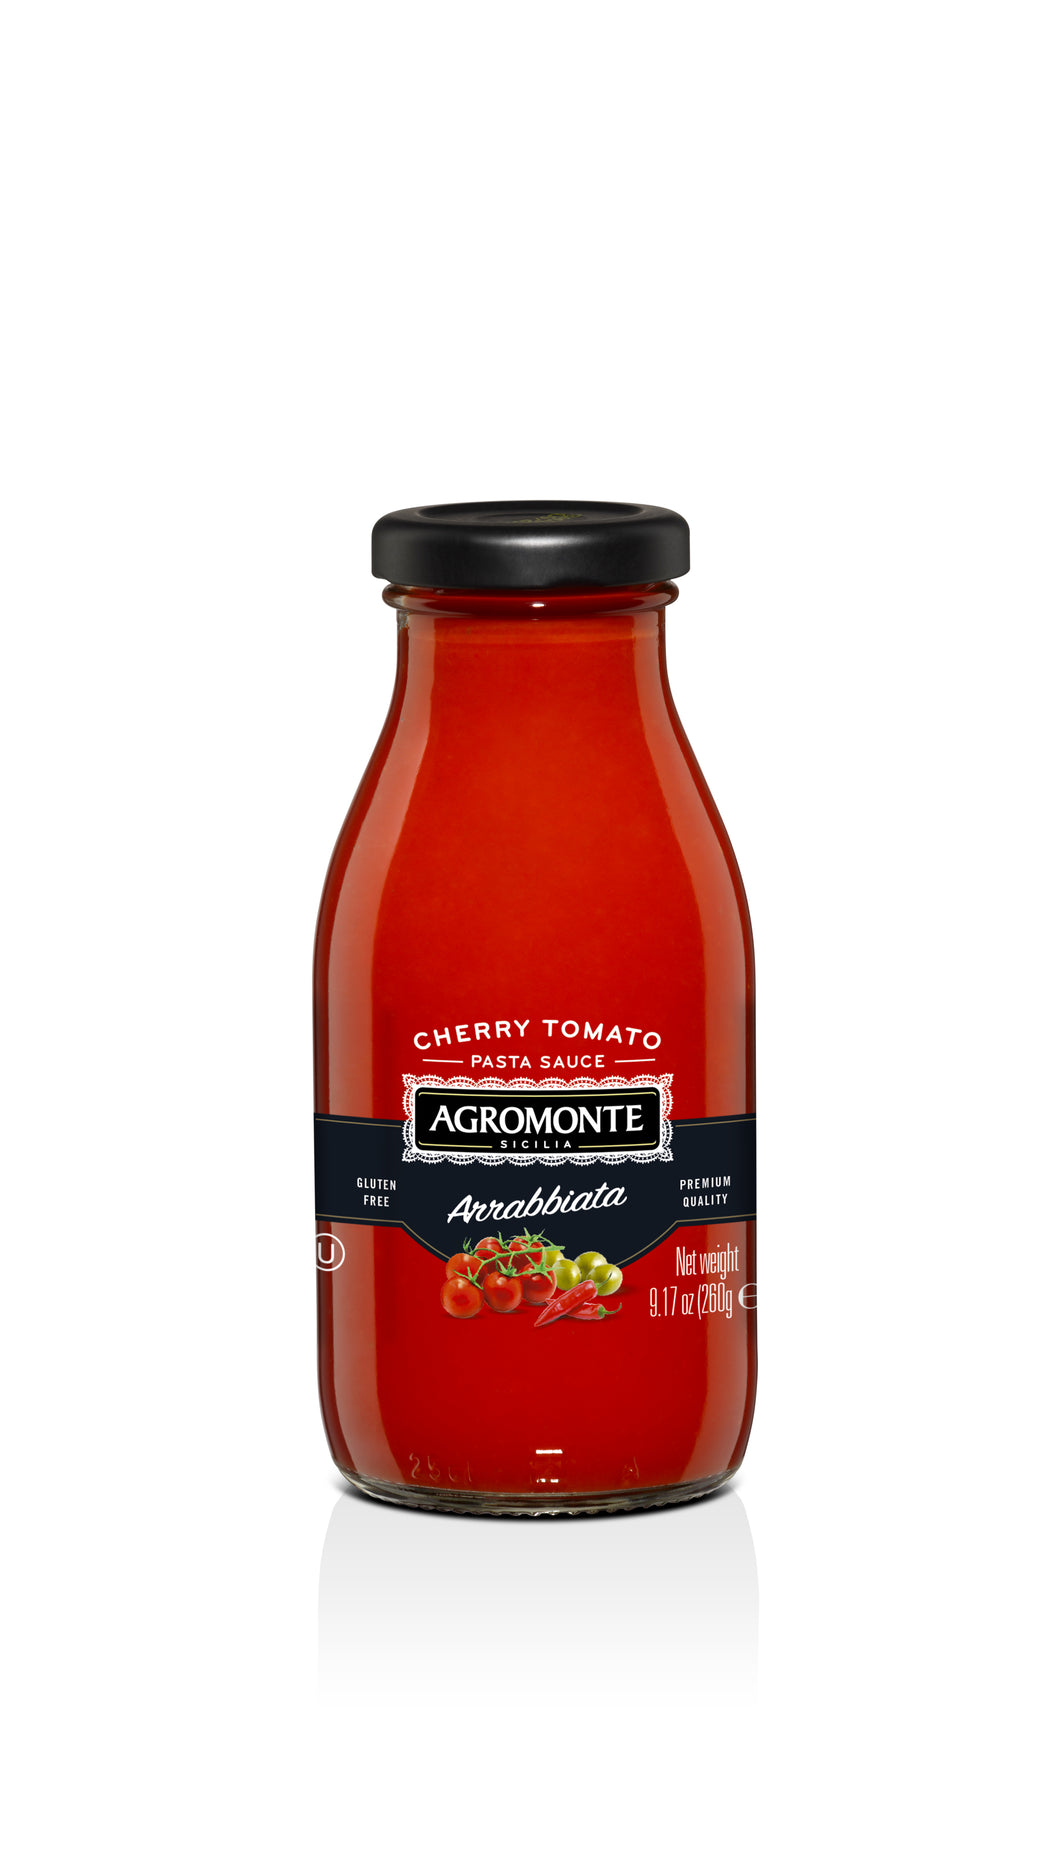 AGROMONTE Arrabbiata Cherry Tomato Pasta Sauce, 9.17oz - International Loft